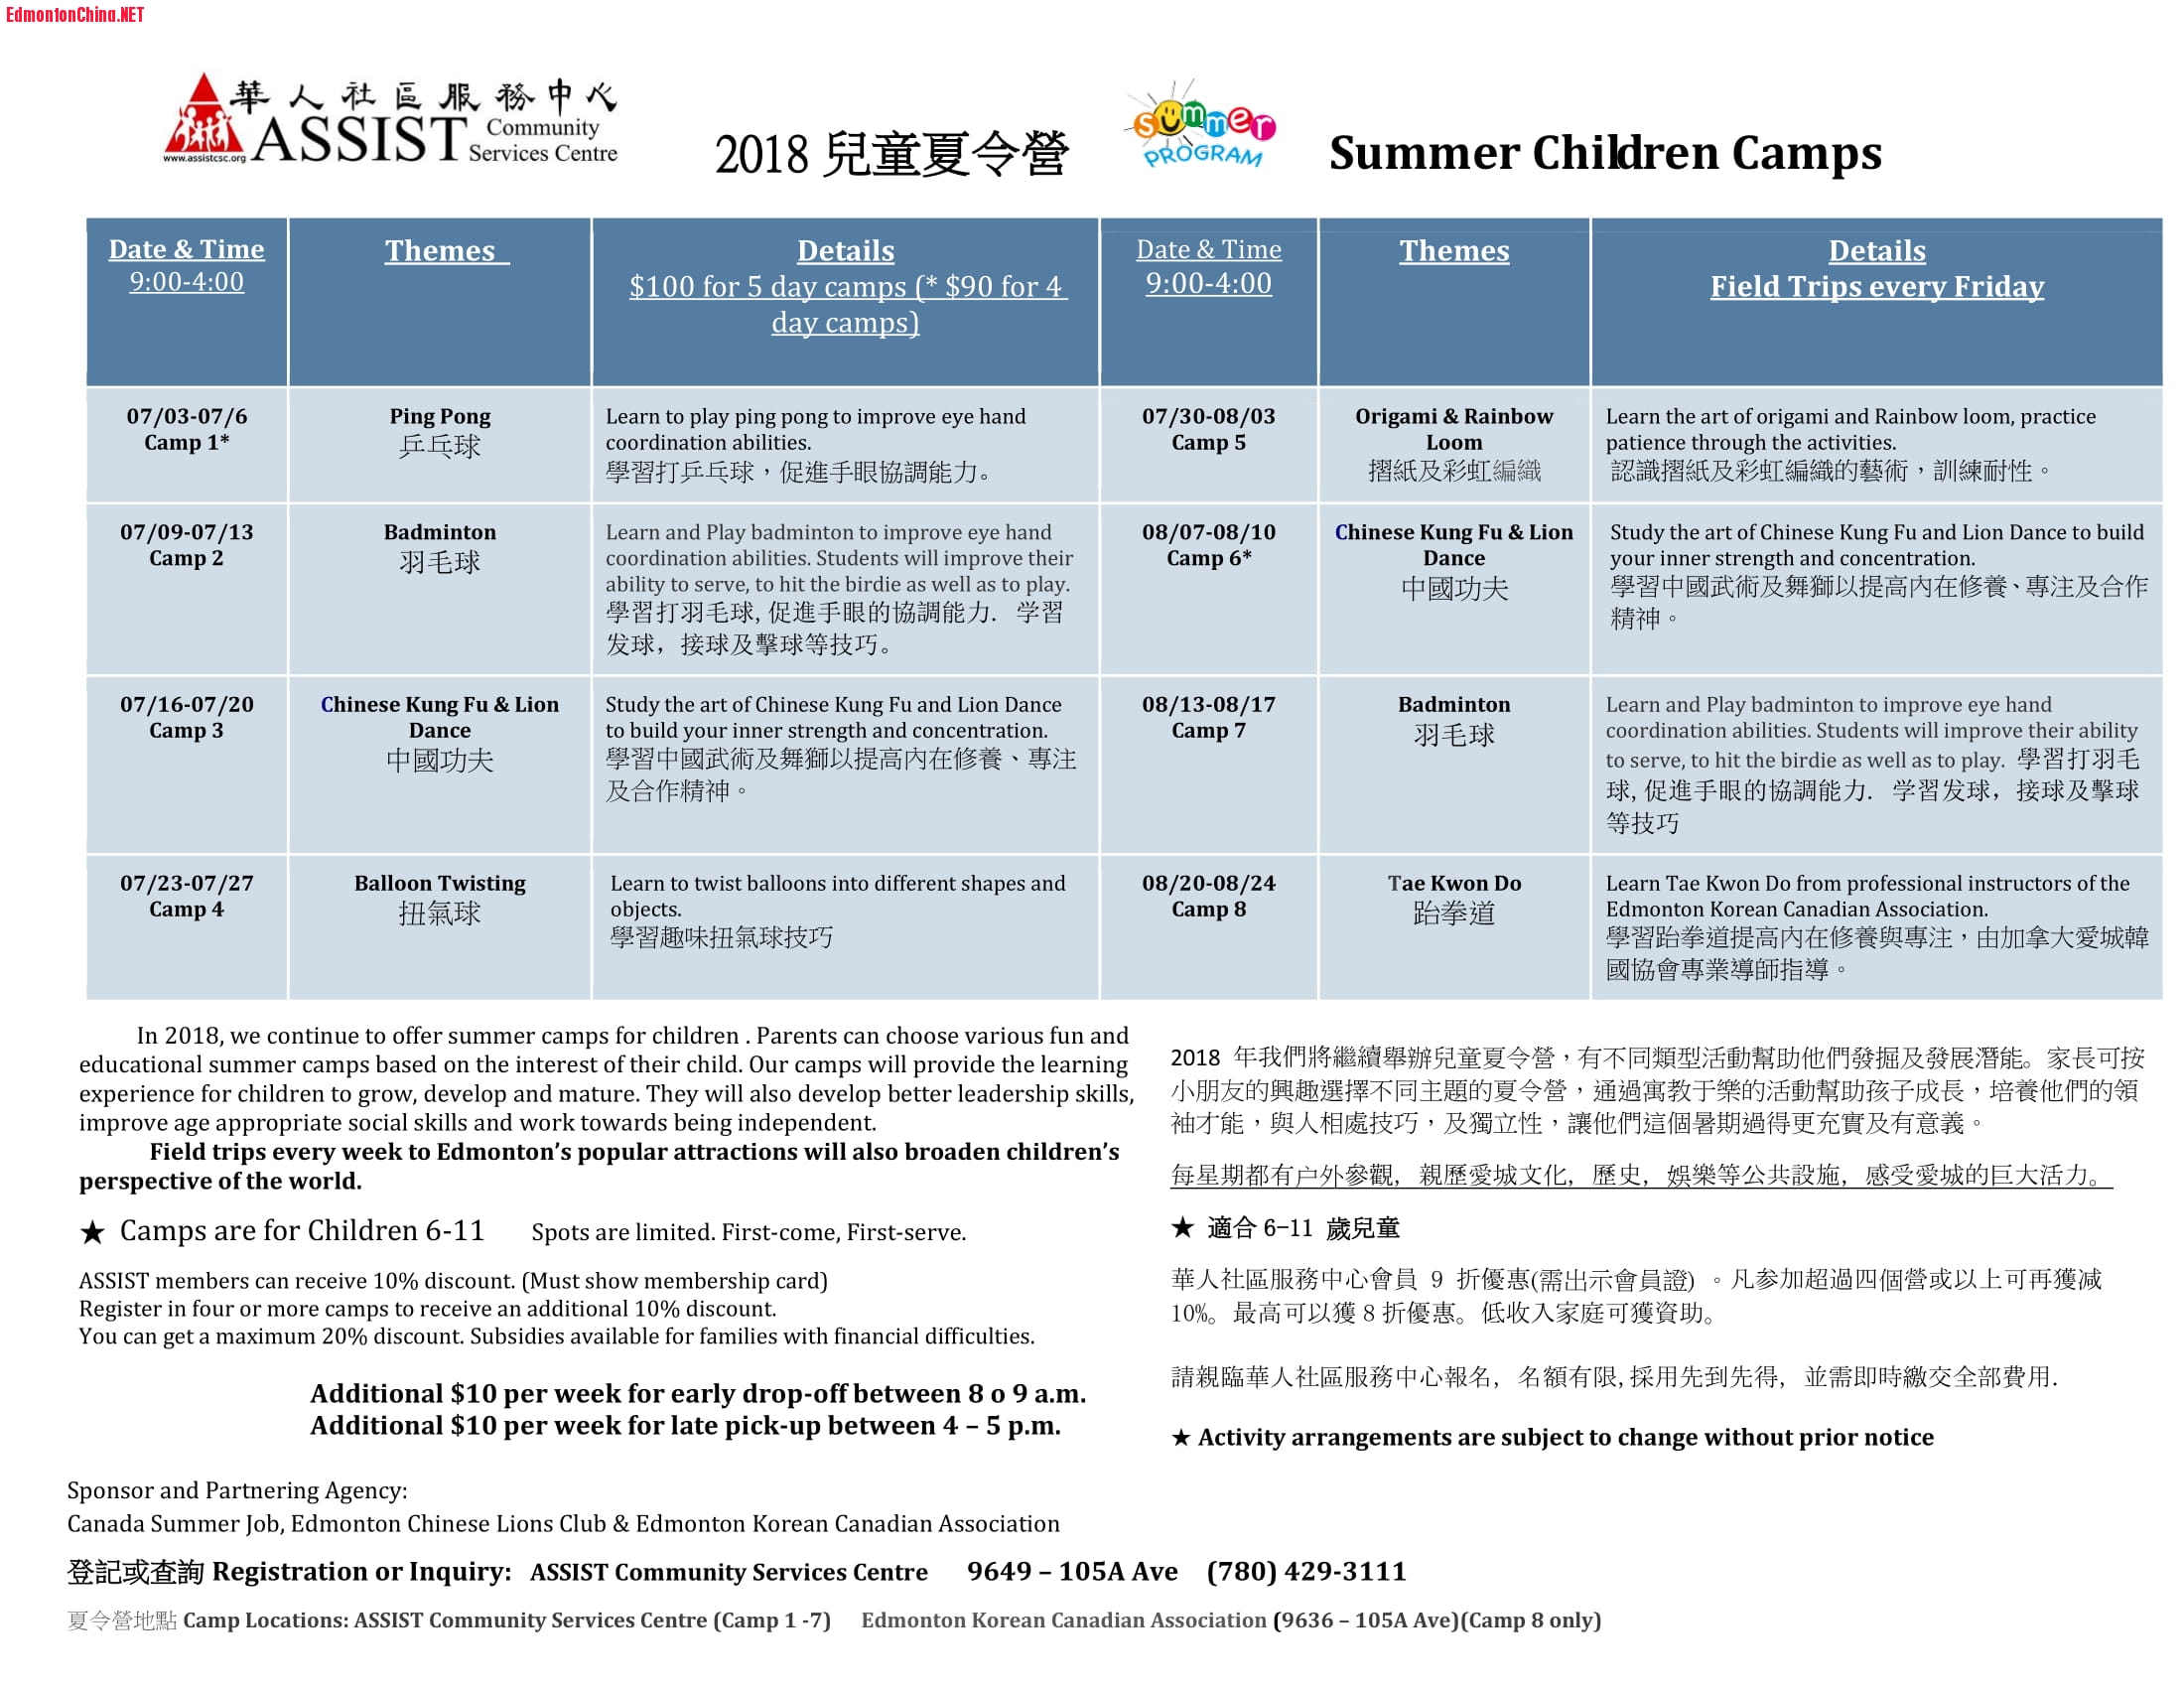 Advertisment English-chinese (Children Summer Camp 2018)-1.jpg